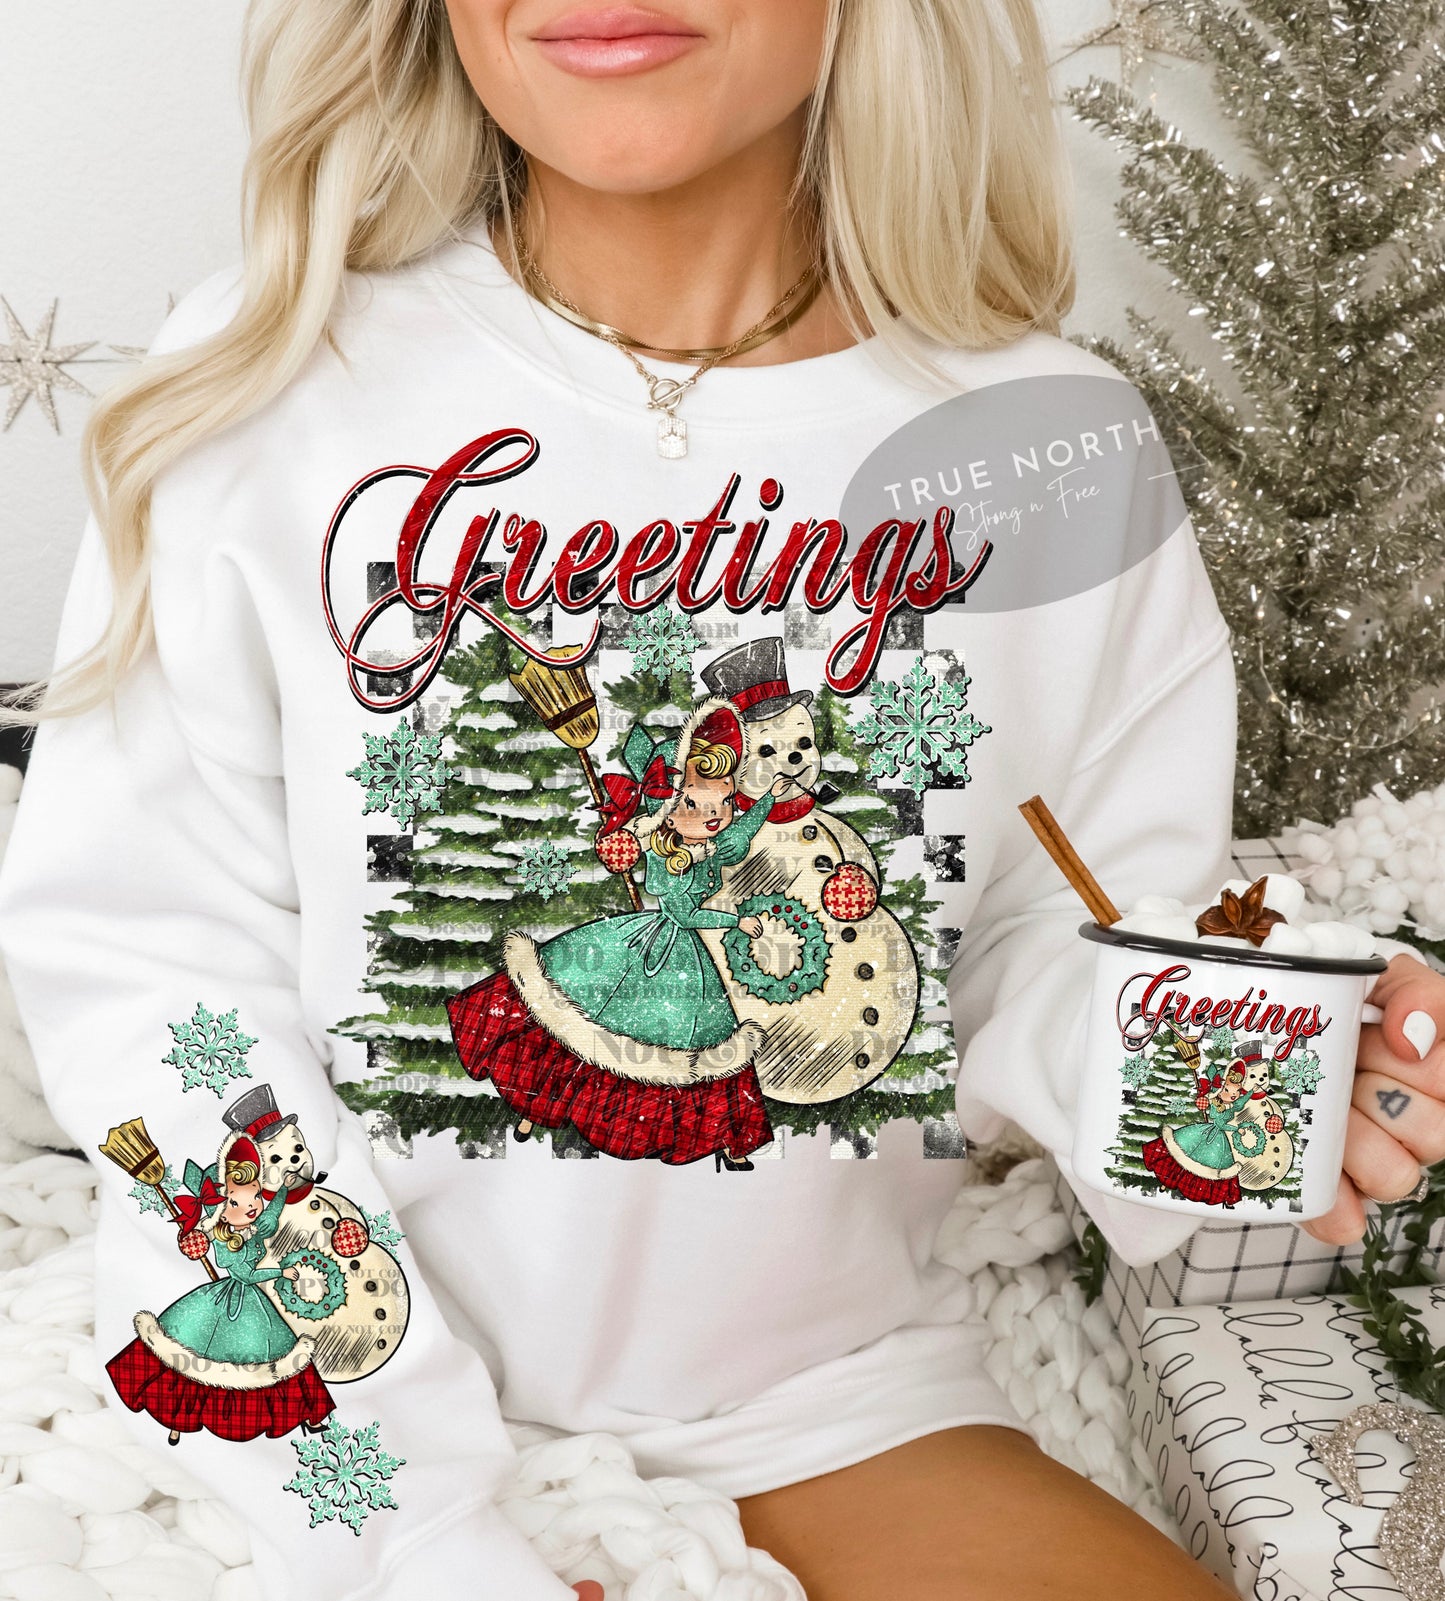 Vintage Christmas Greetings Sweatshirt or T-Shirt with Sleeves - Festive Holiday Apparel